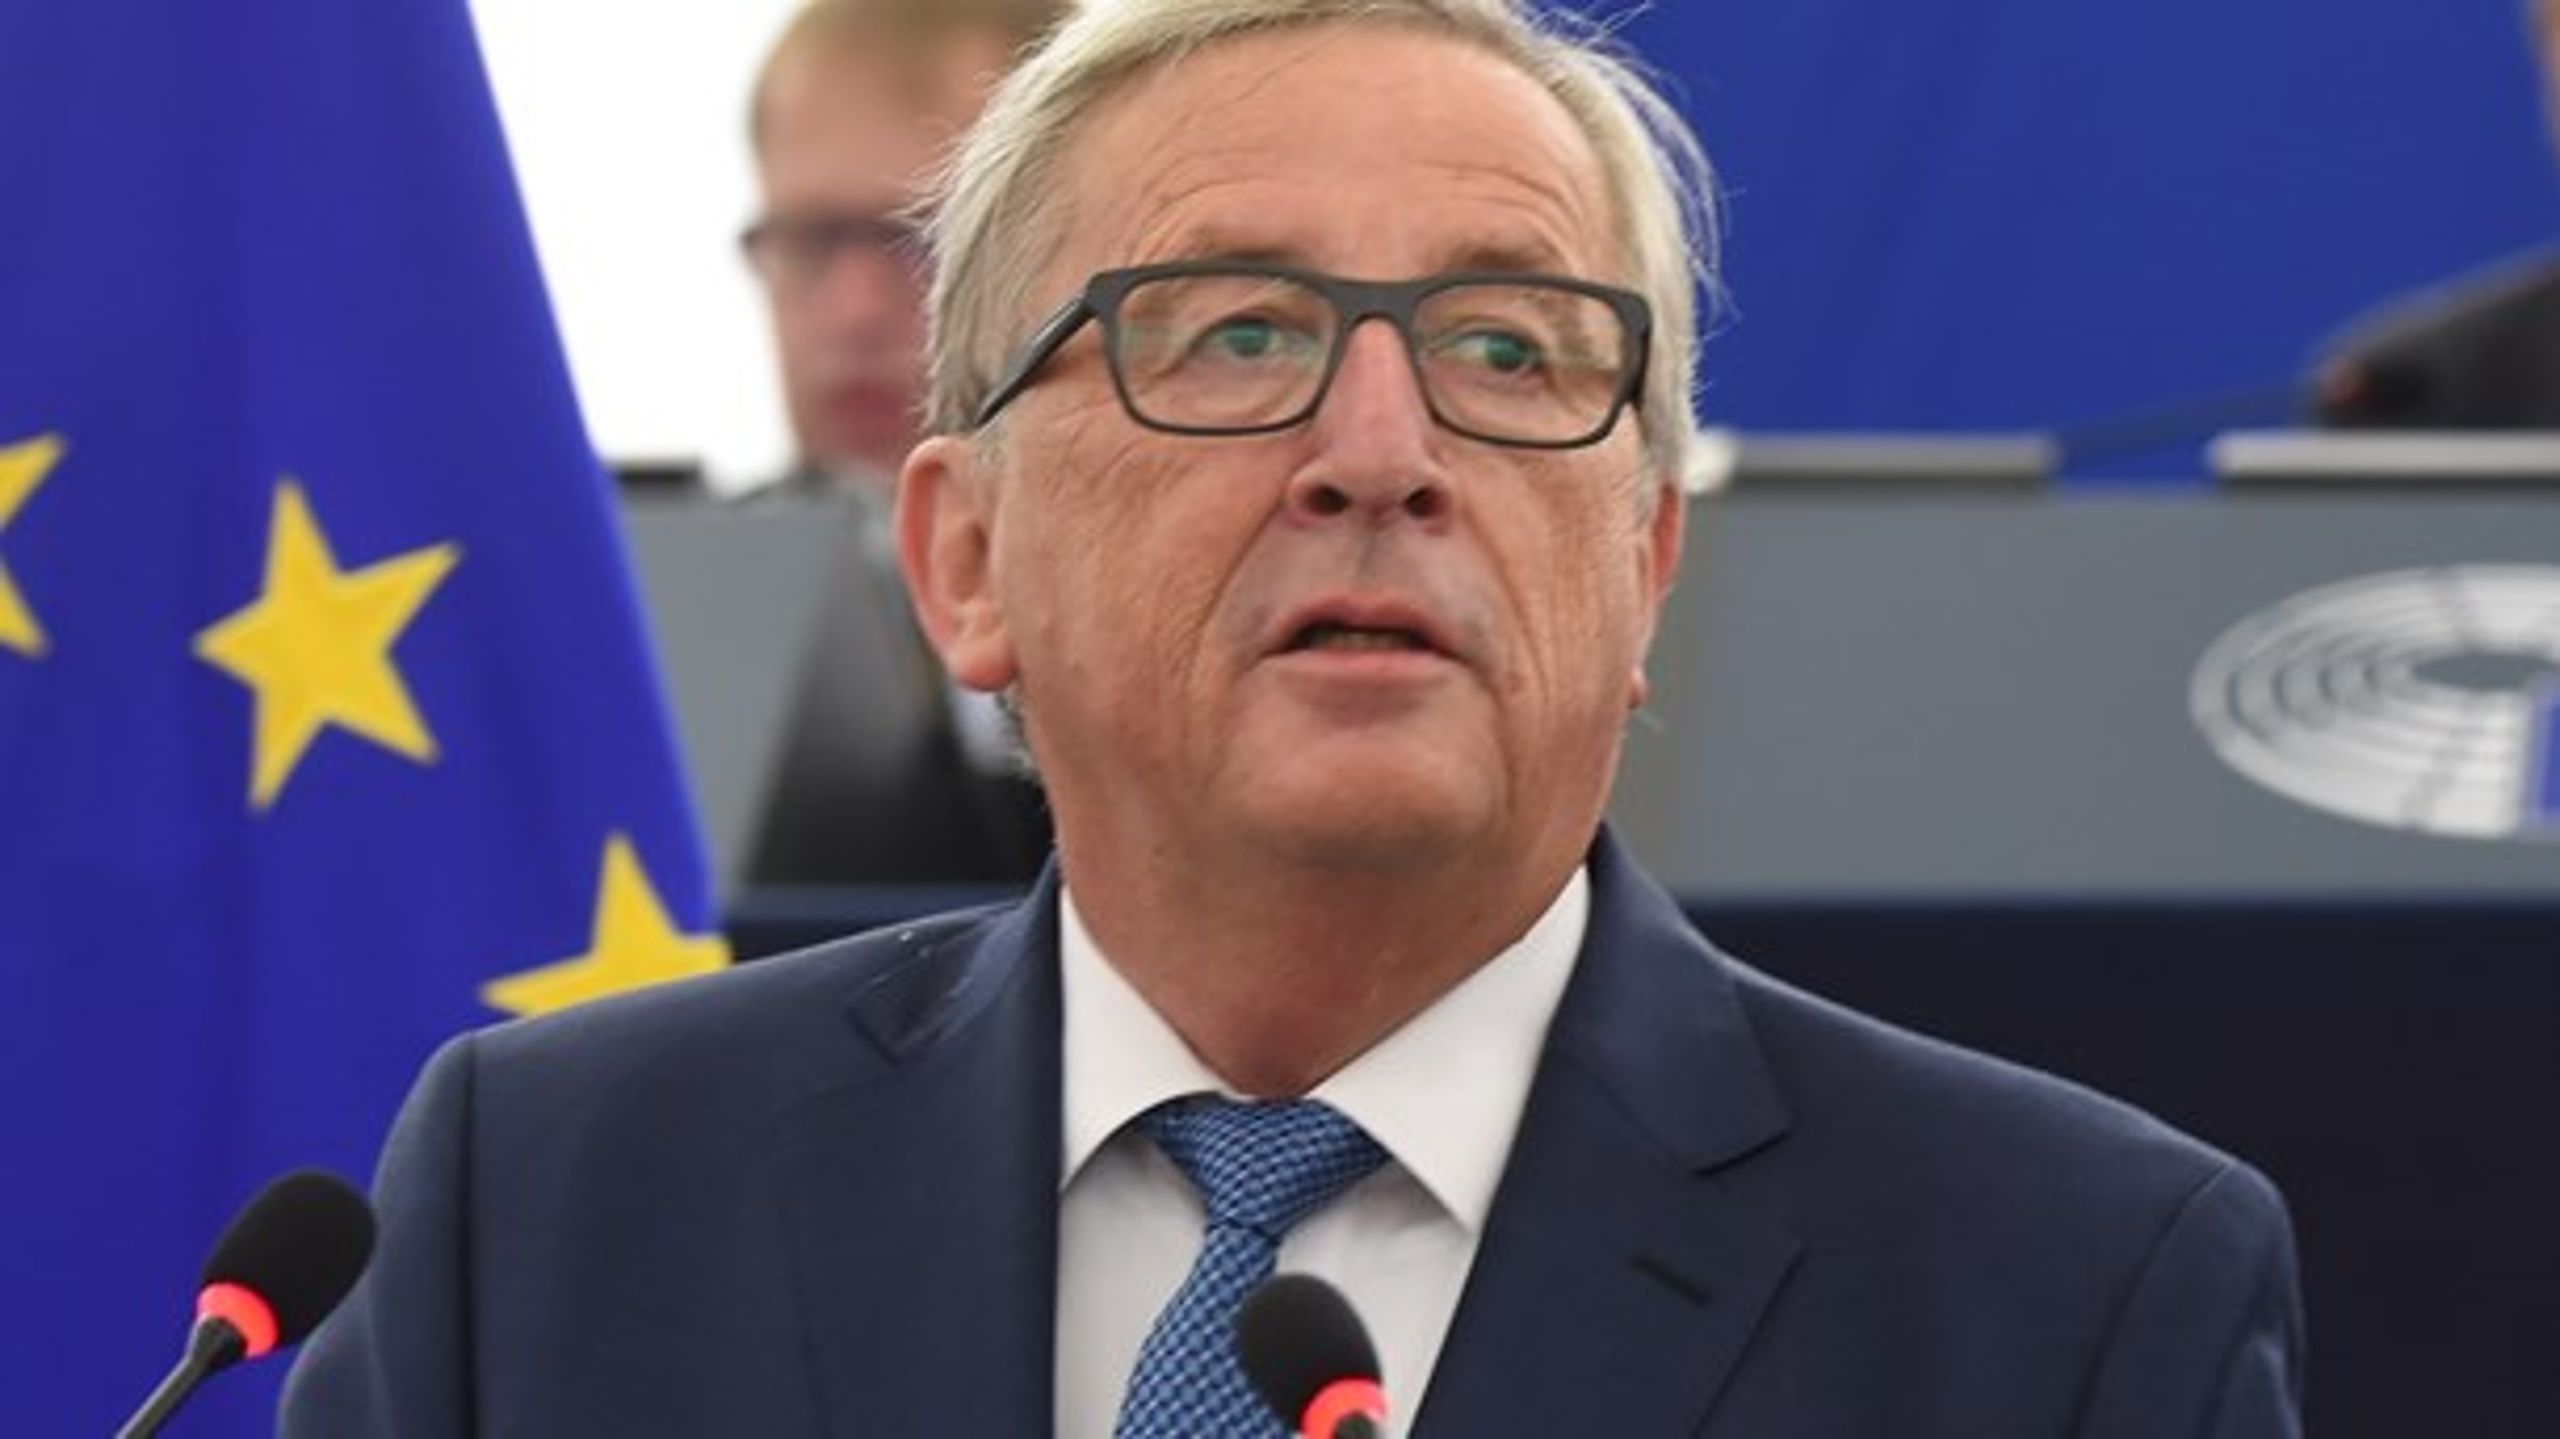 EU-kommissionens ordförande Jean-Claude Juncker